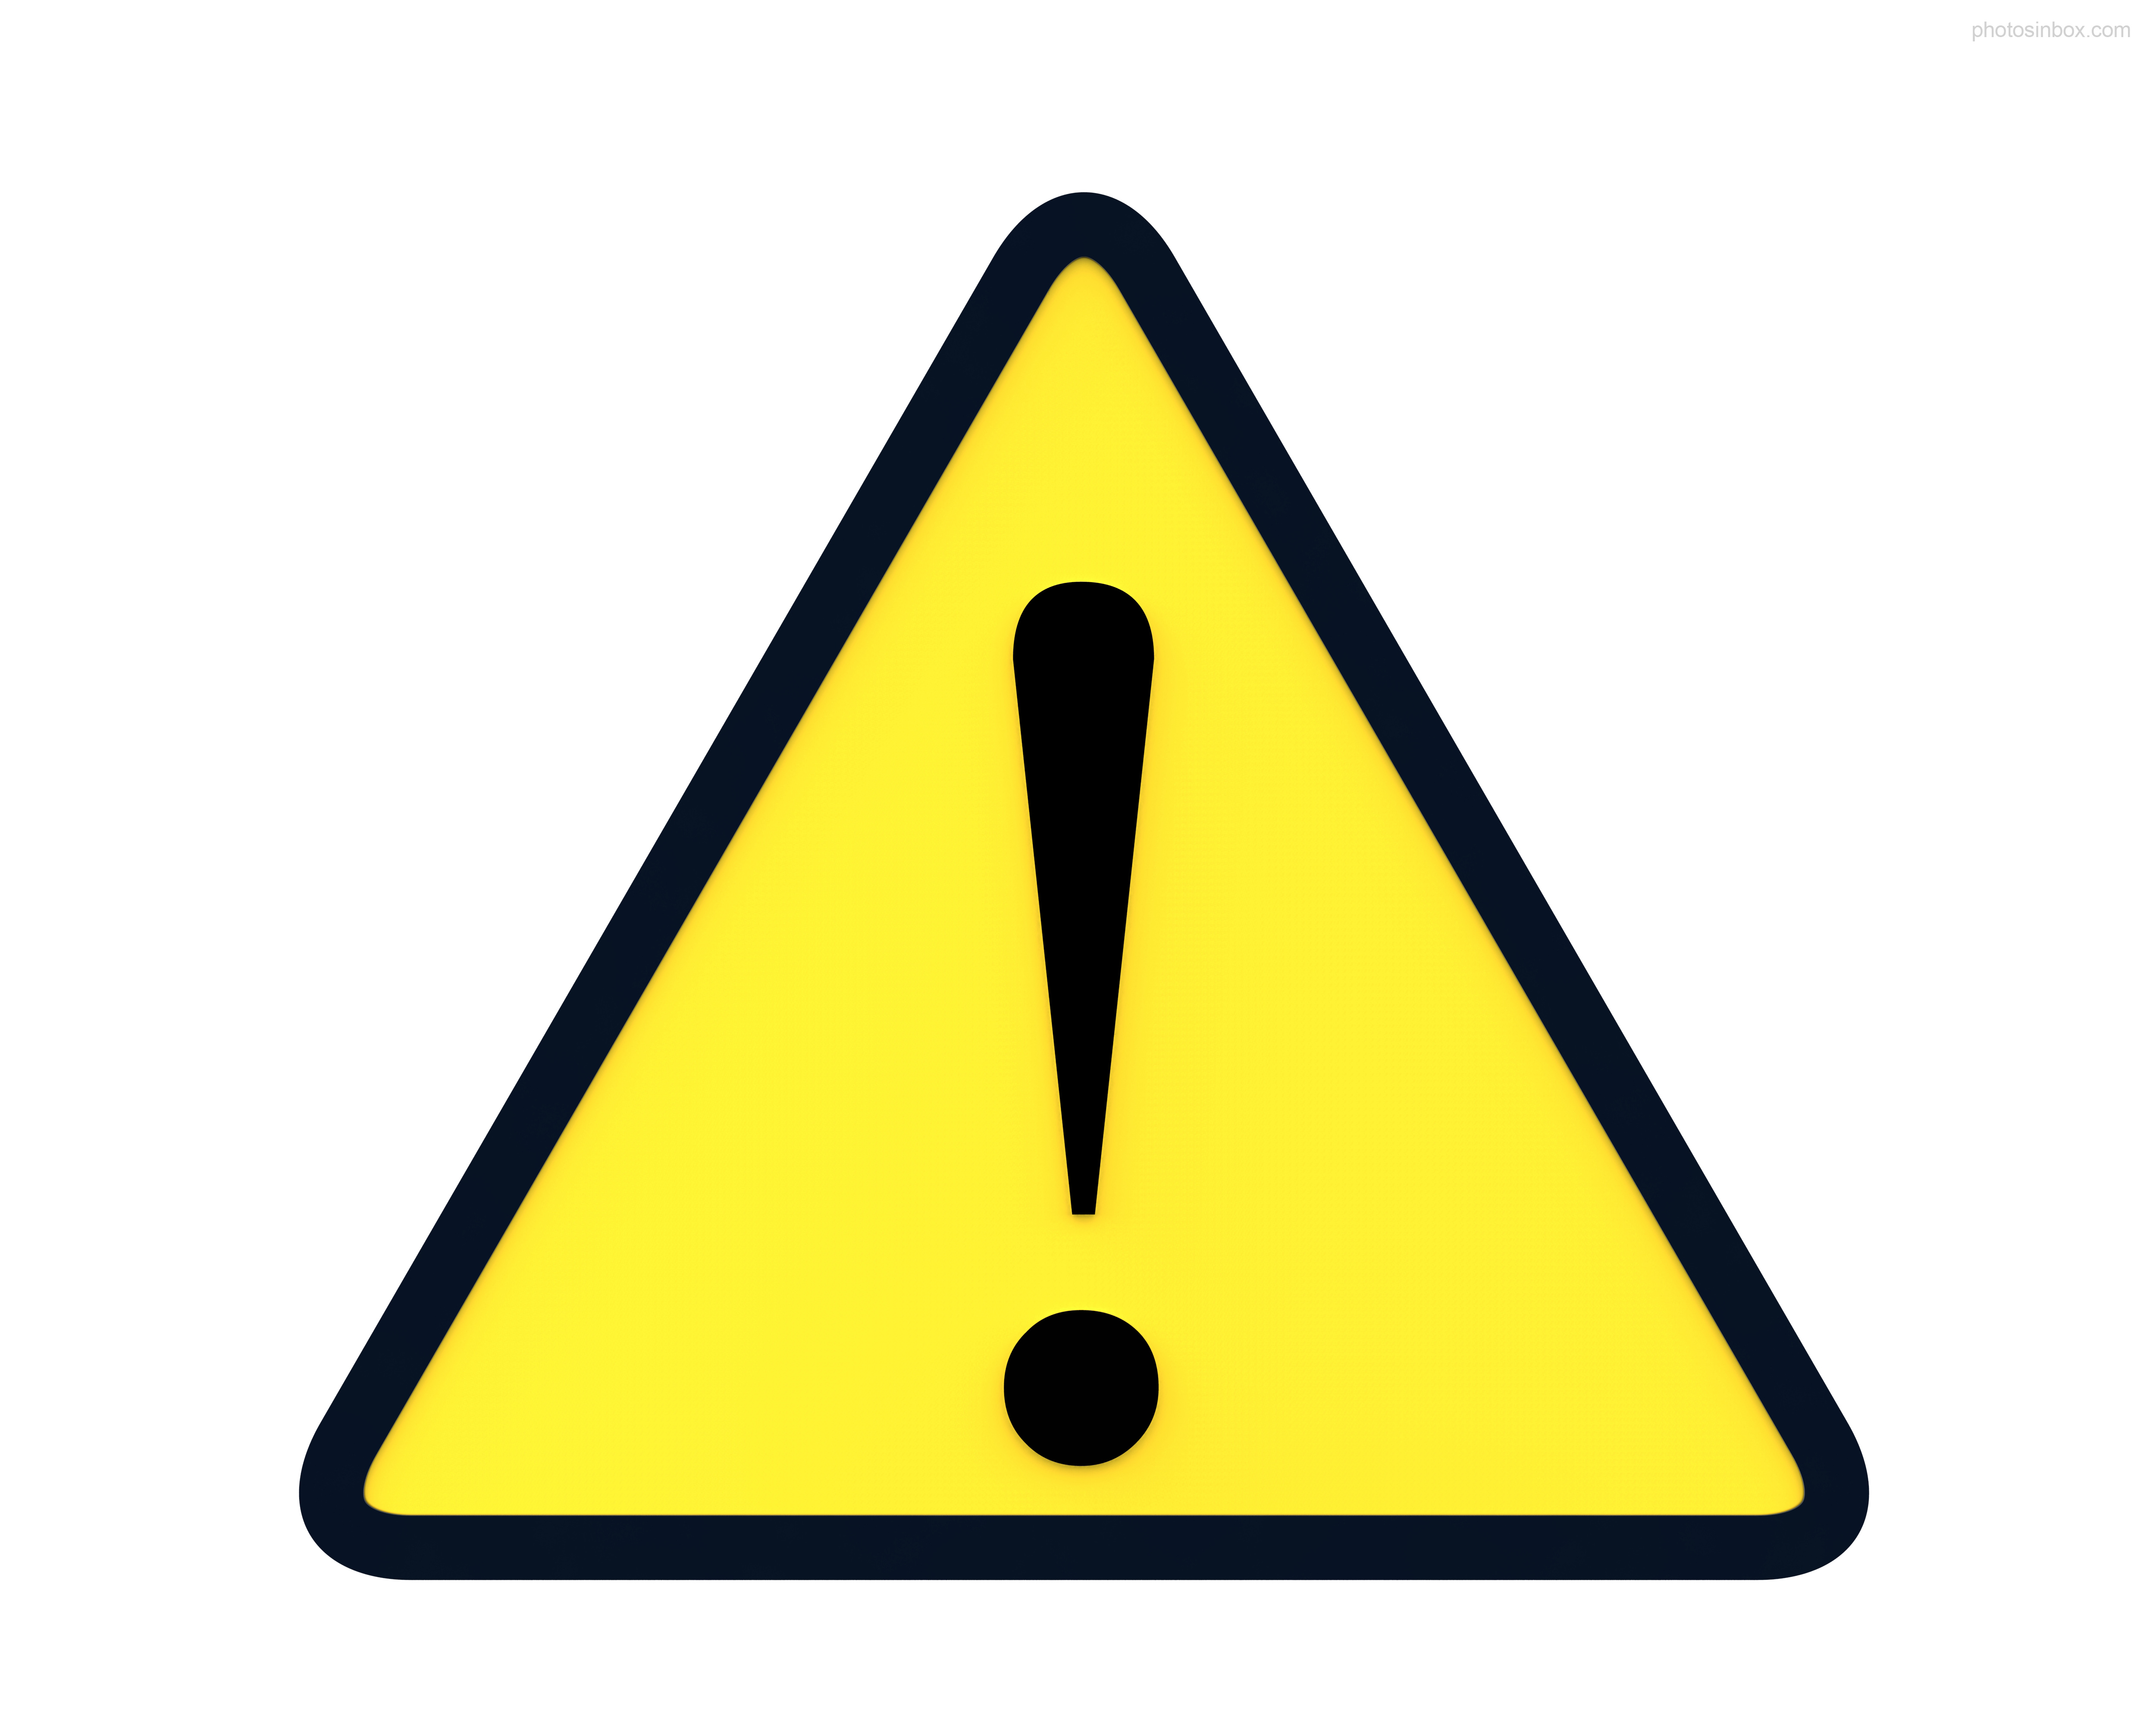 Bmw warning symbol yellow triangle #6